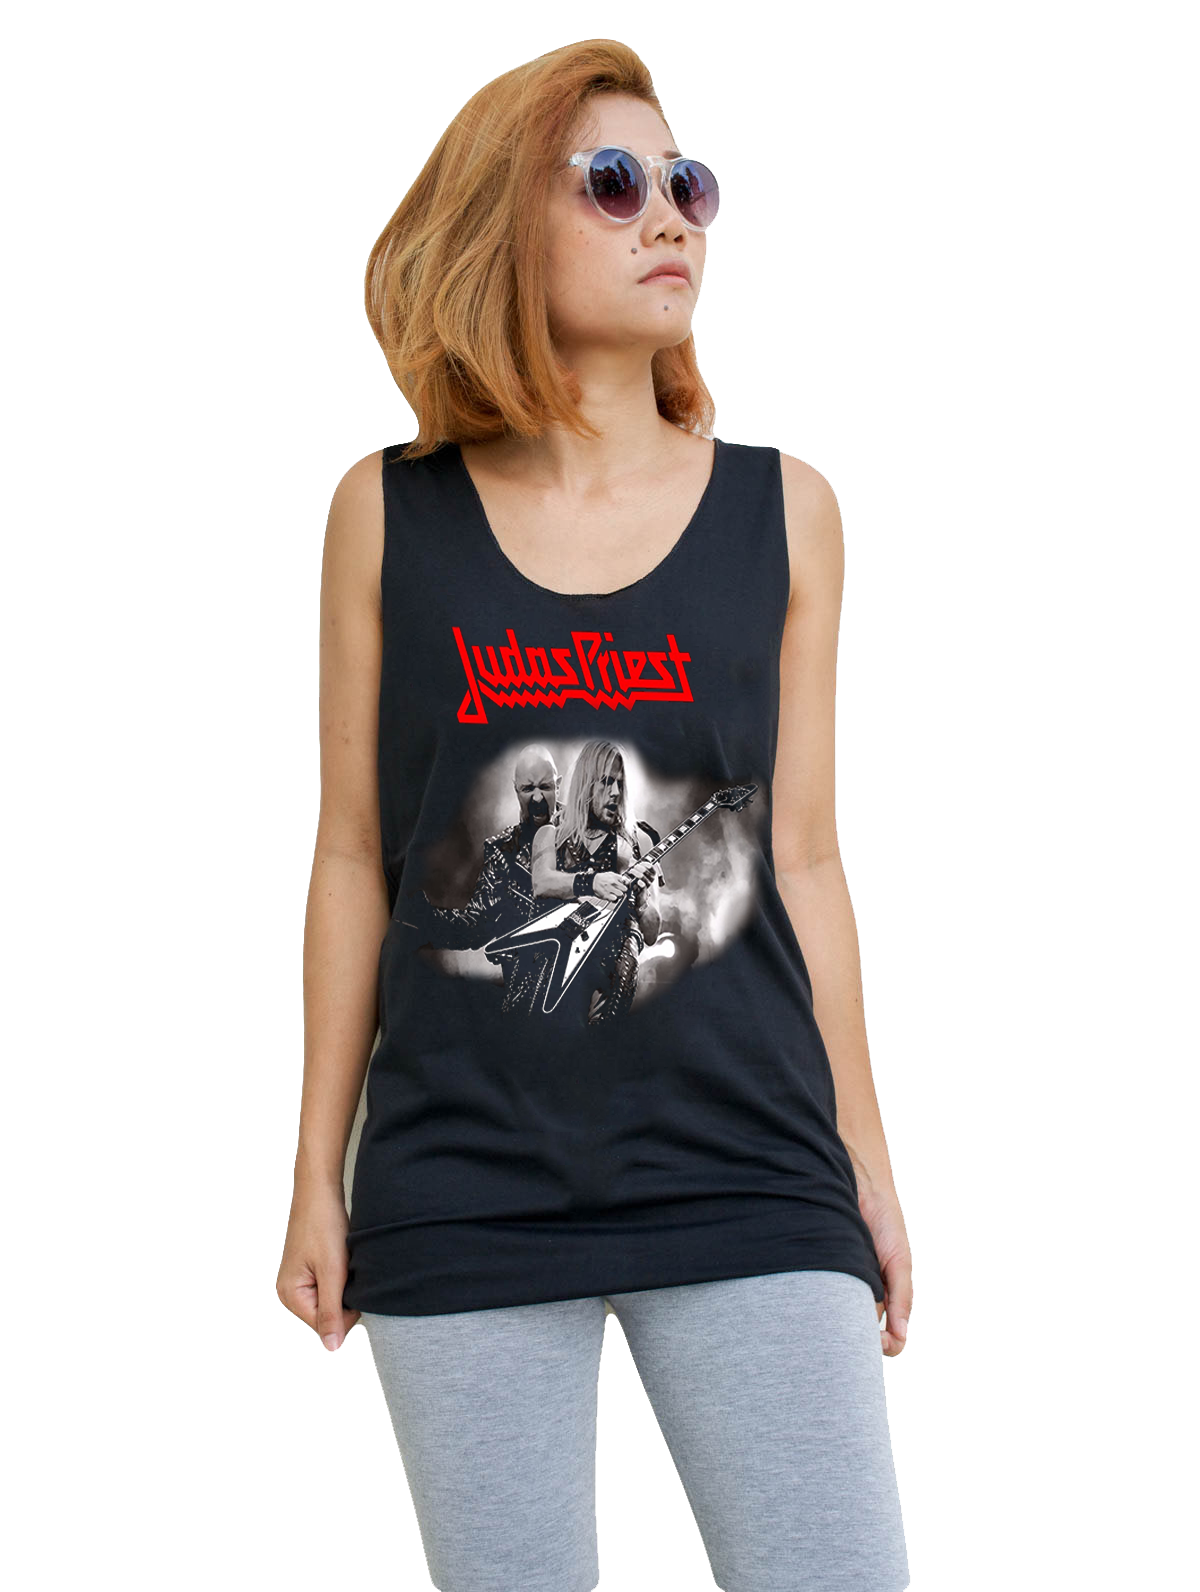 Unisex Judas Priest Tank-Top Singlet vest Sleeveless T-shirt